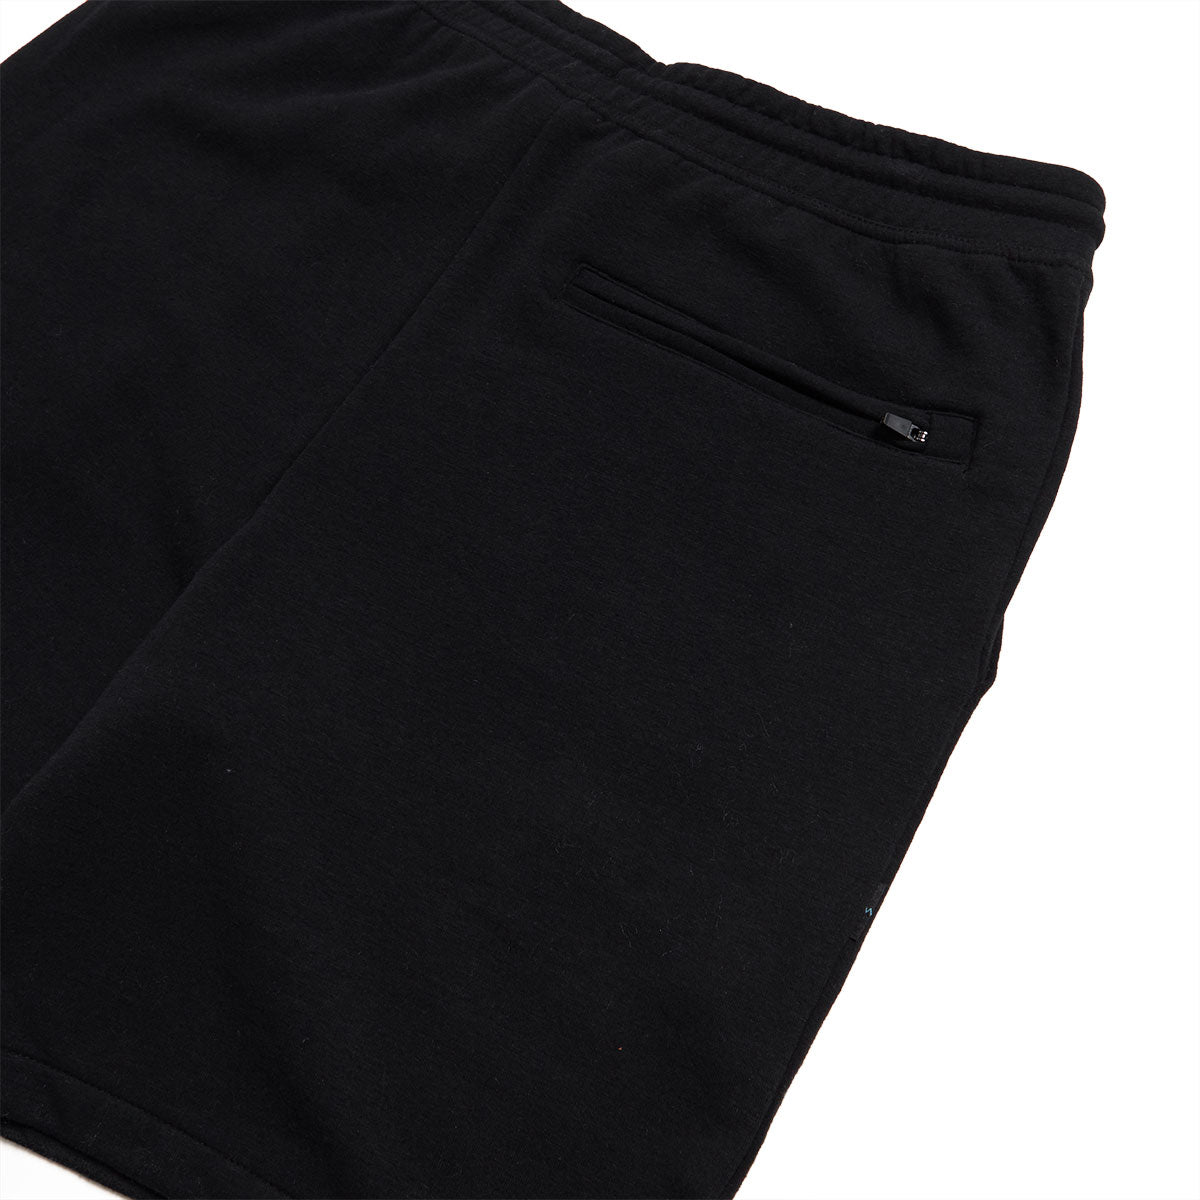 Stance Shelter Shorts - Black image 5